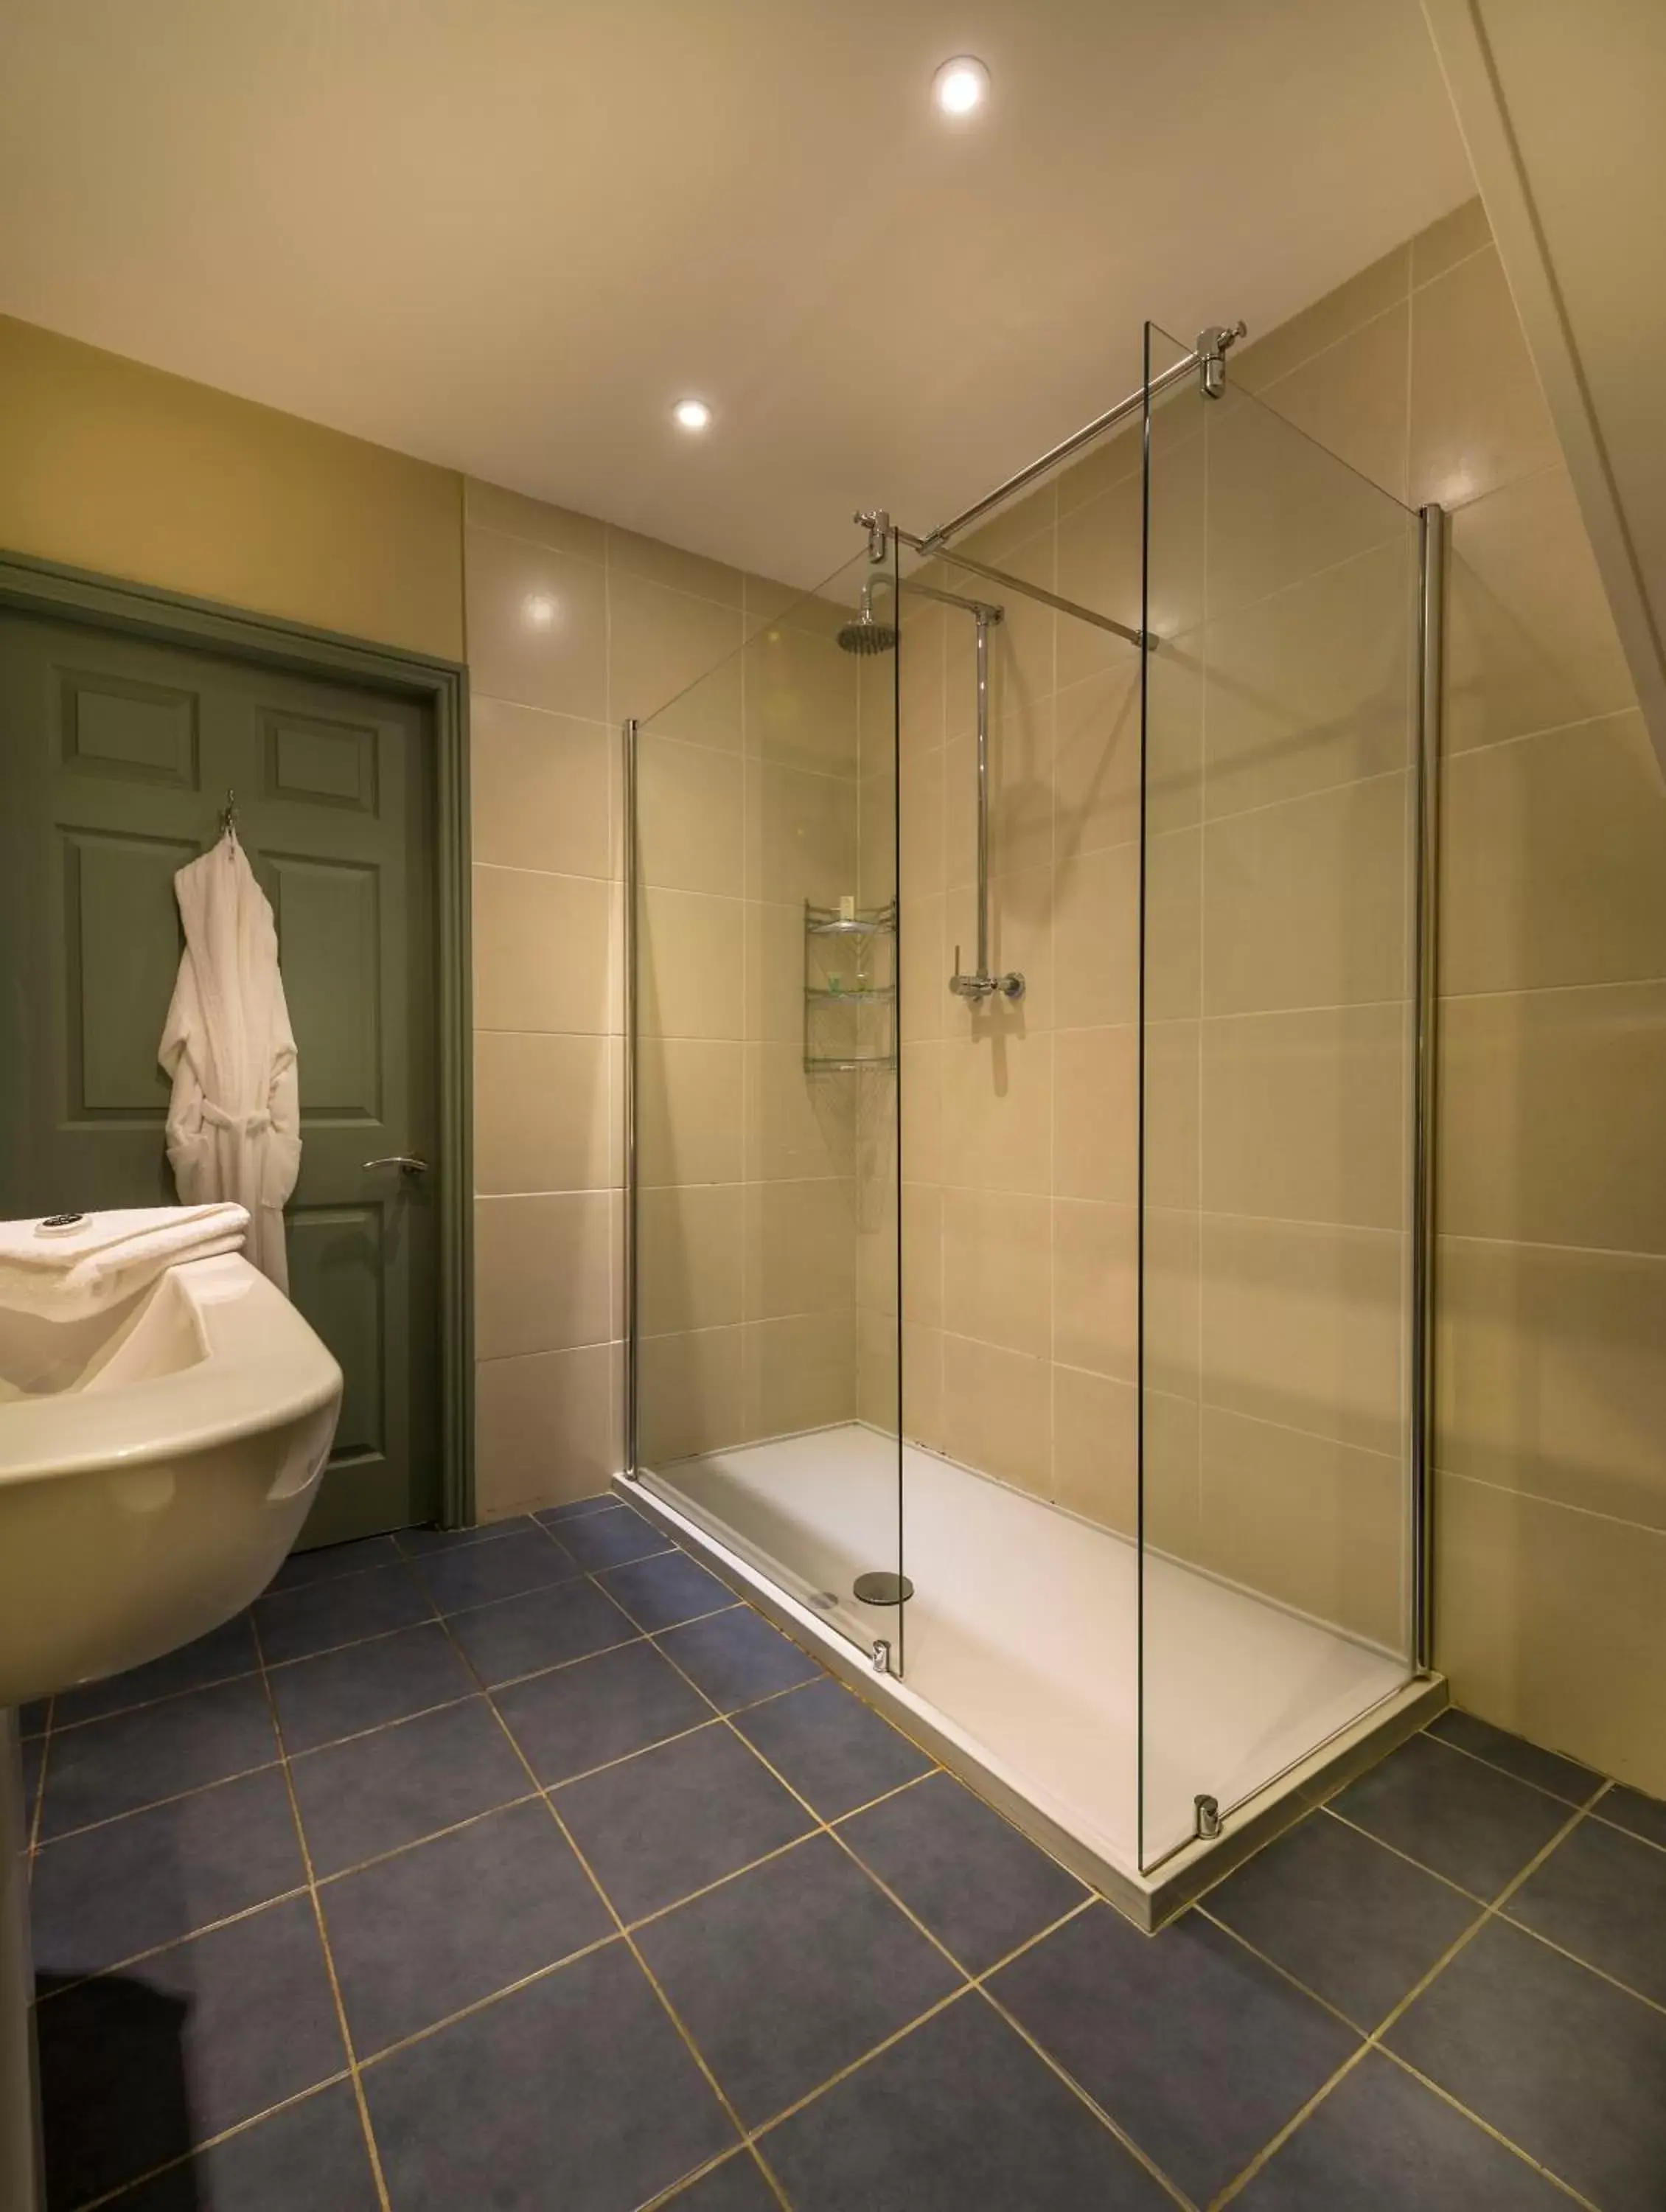 Bathroom in The Golden Fleece Hotel, Thirsk, North Yorkshire